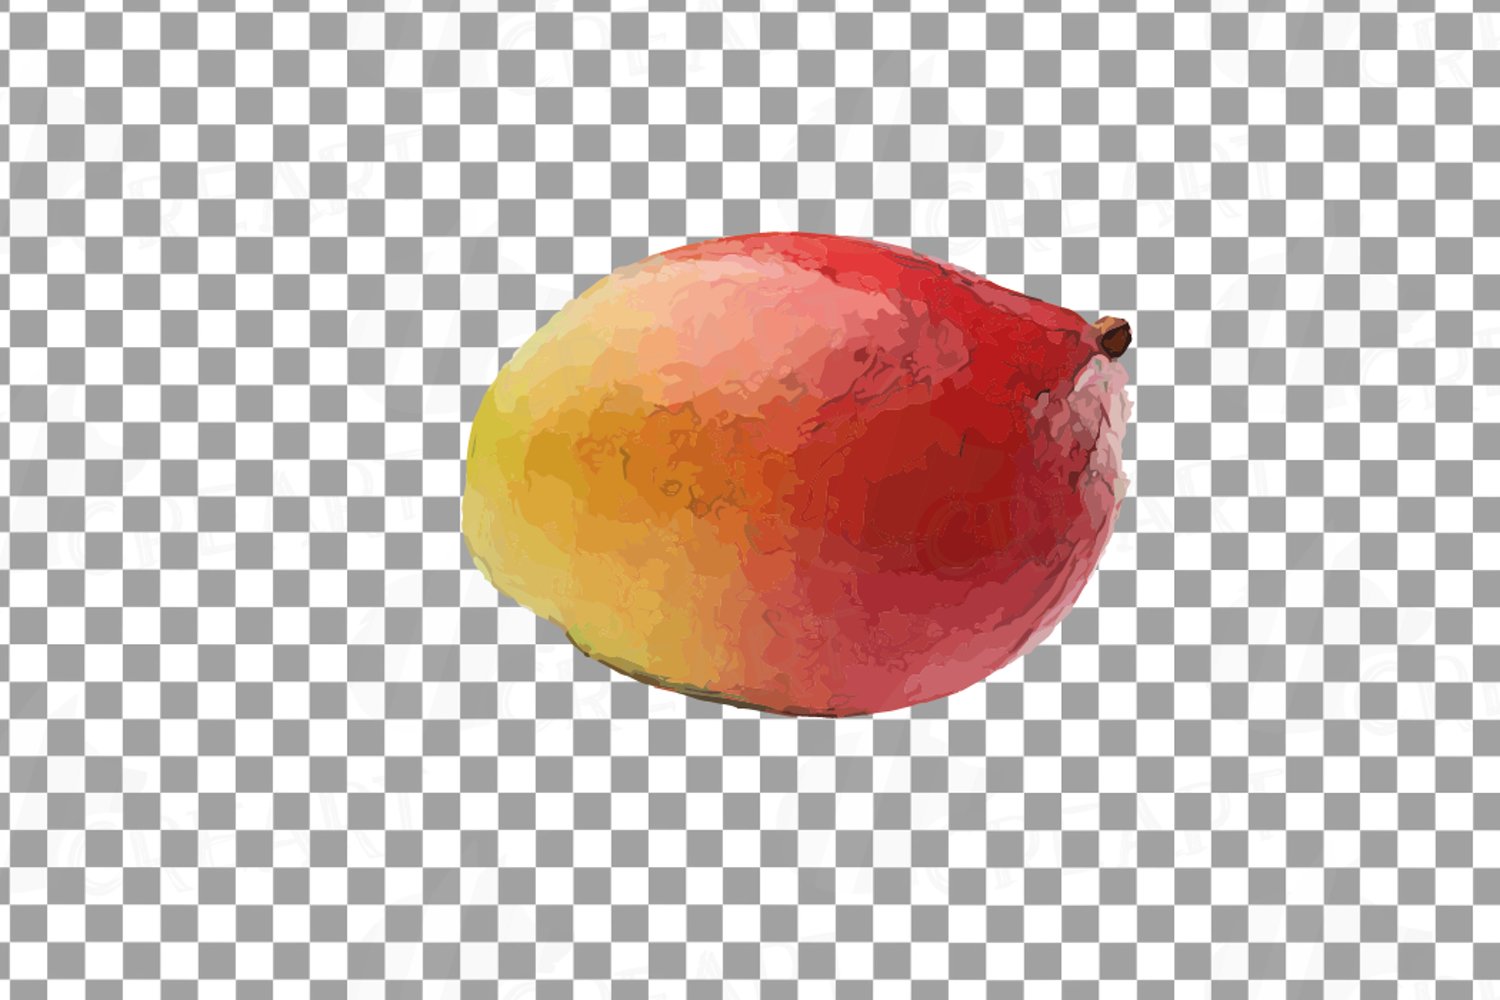 Mango on transparent background.